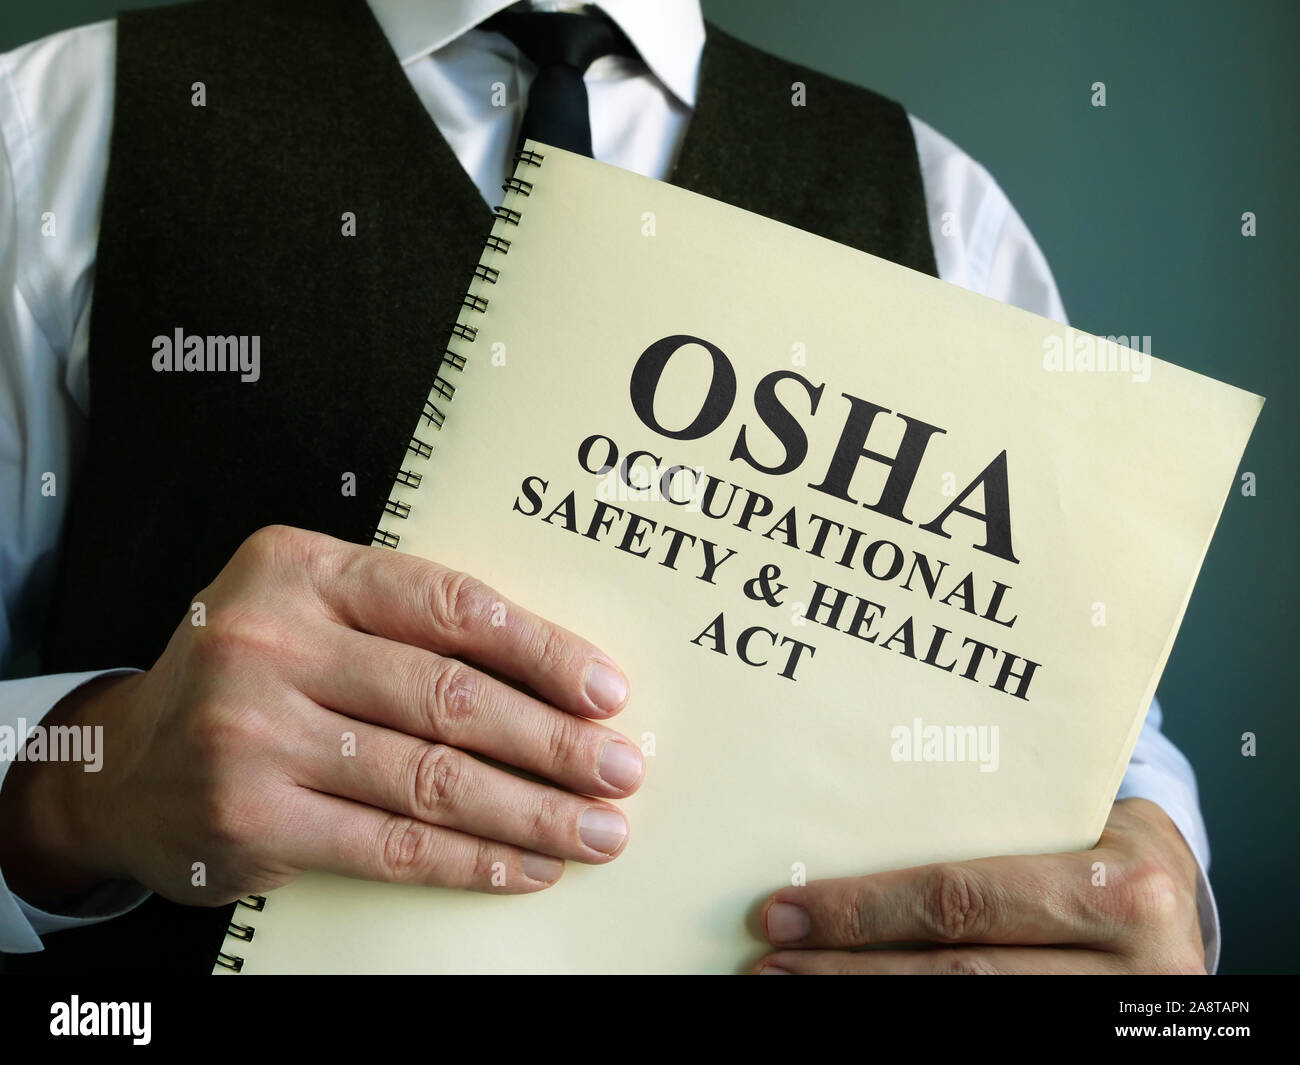 OSHA Occupational Safety & Health Act dans les mains. Banque D'Images